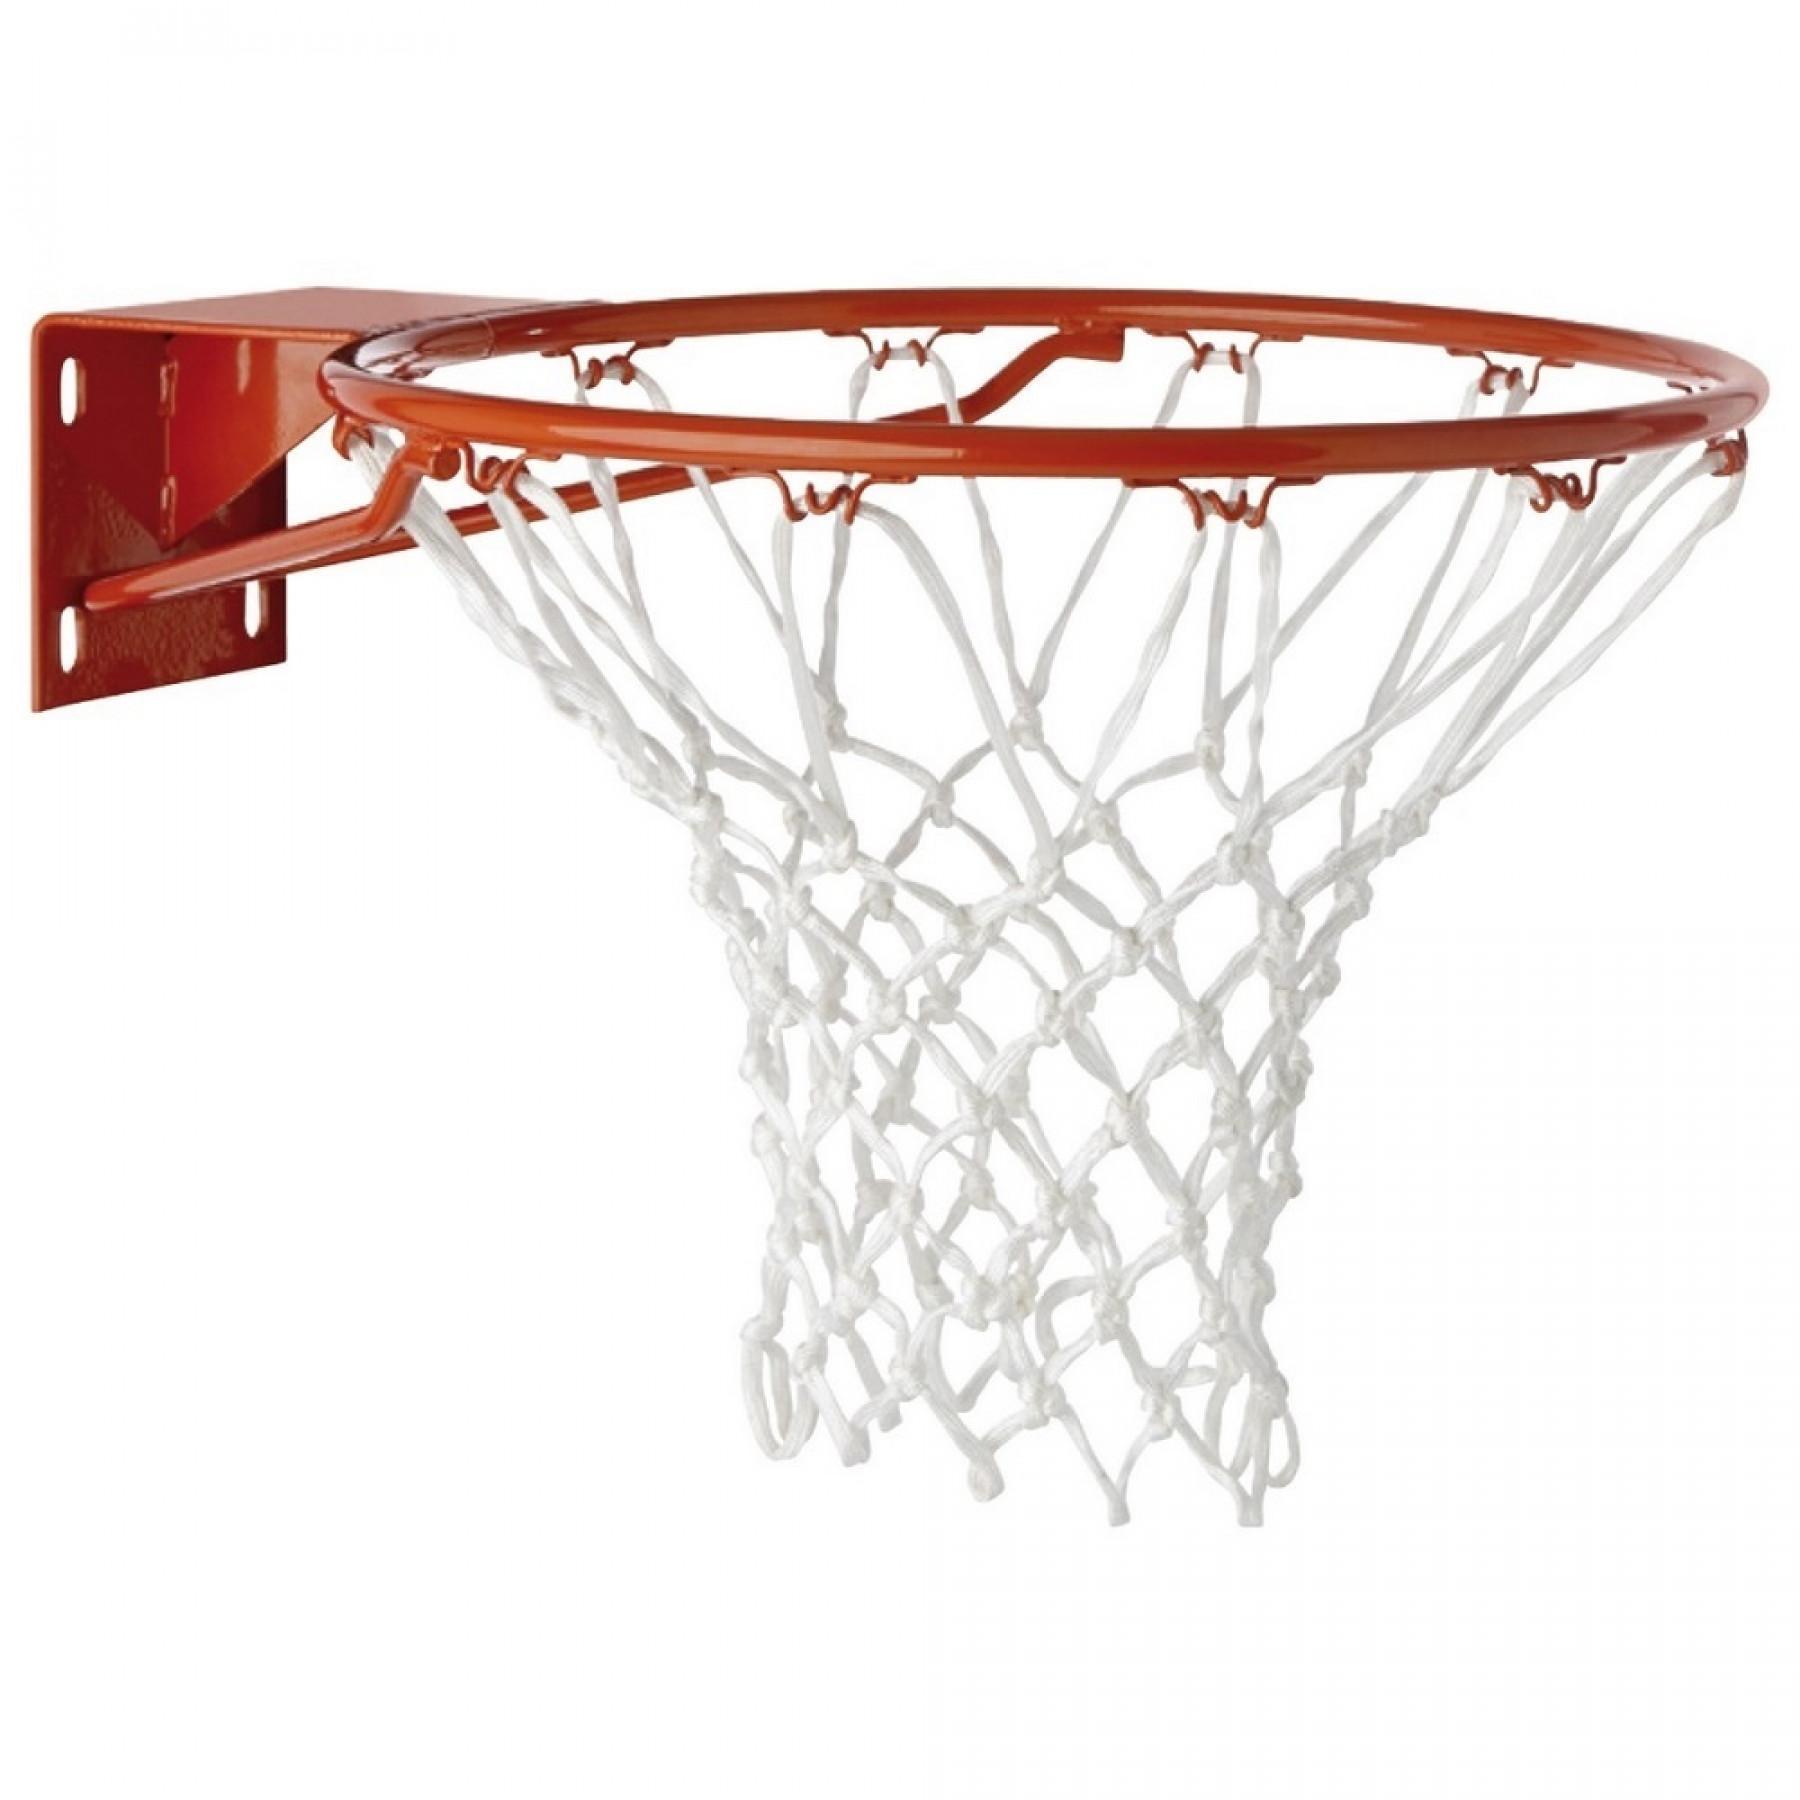 Red de baloncesto 6 mm tremblay (x2)